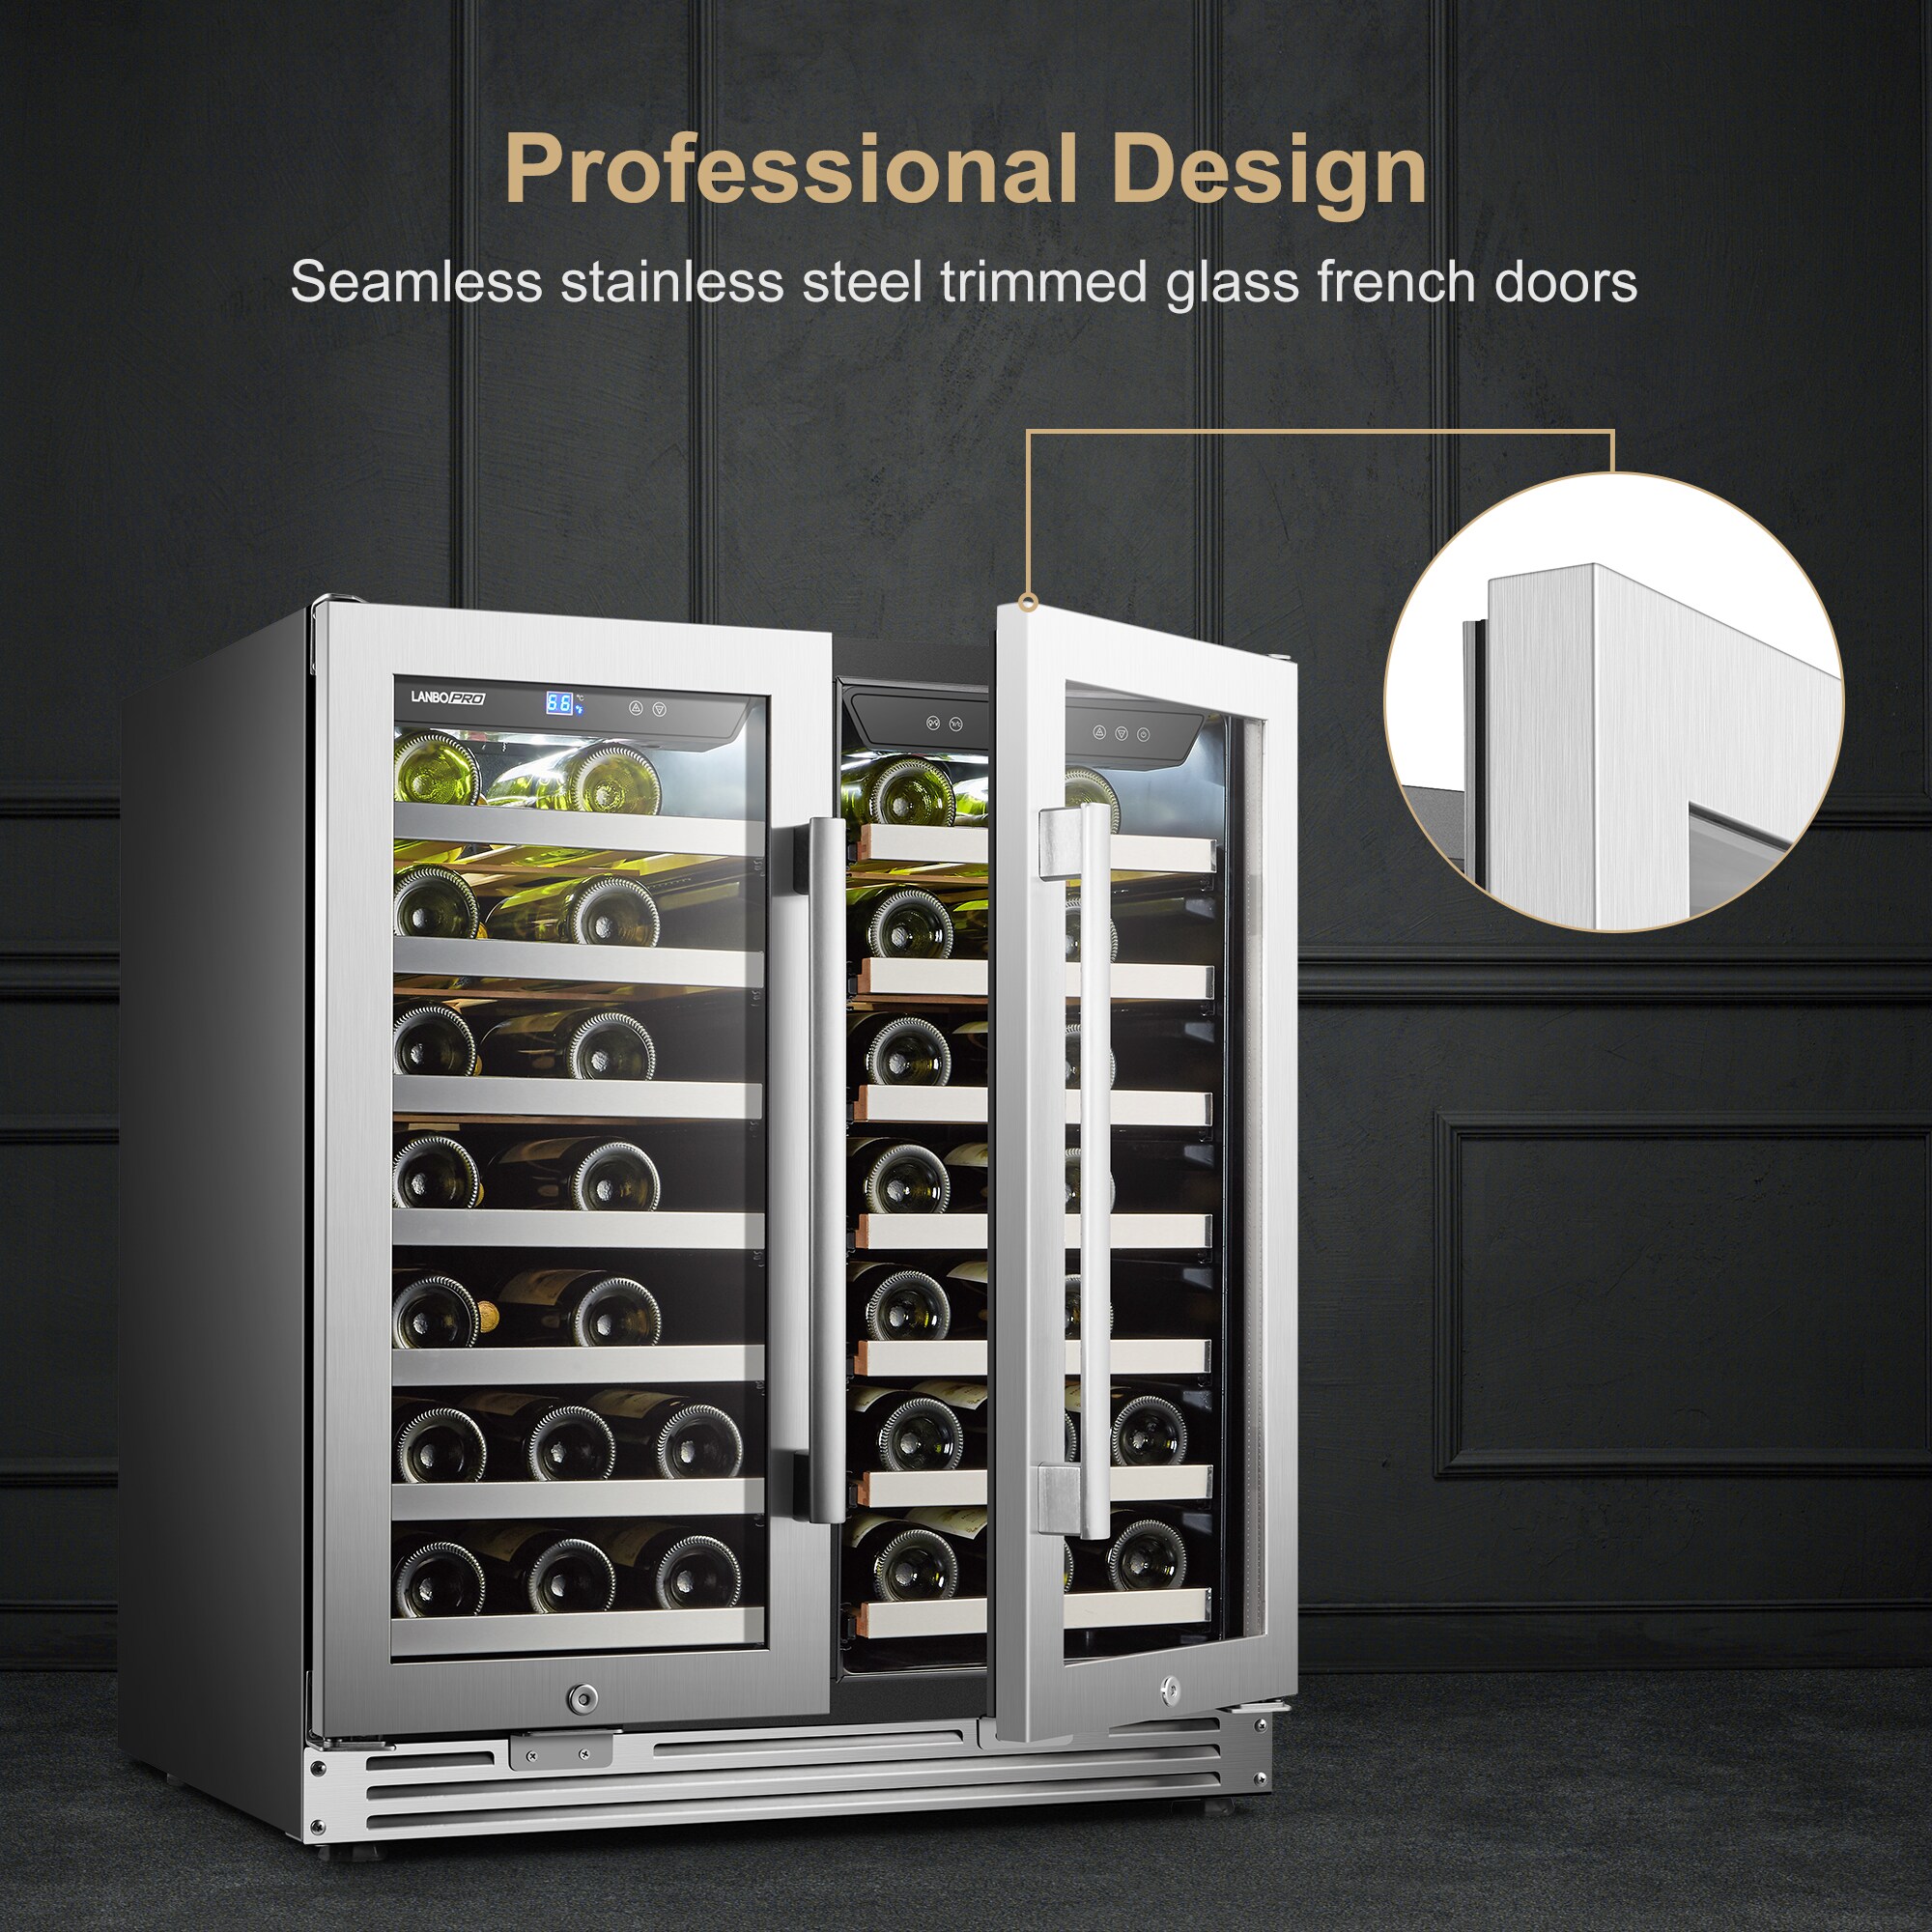 LanboPro 118 Can Beverage Refrigerator - LP54BC